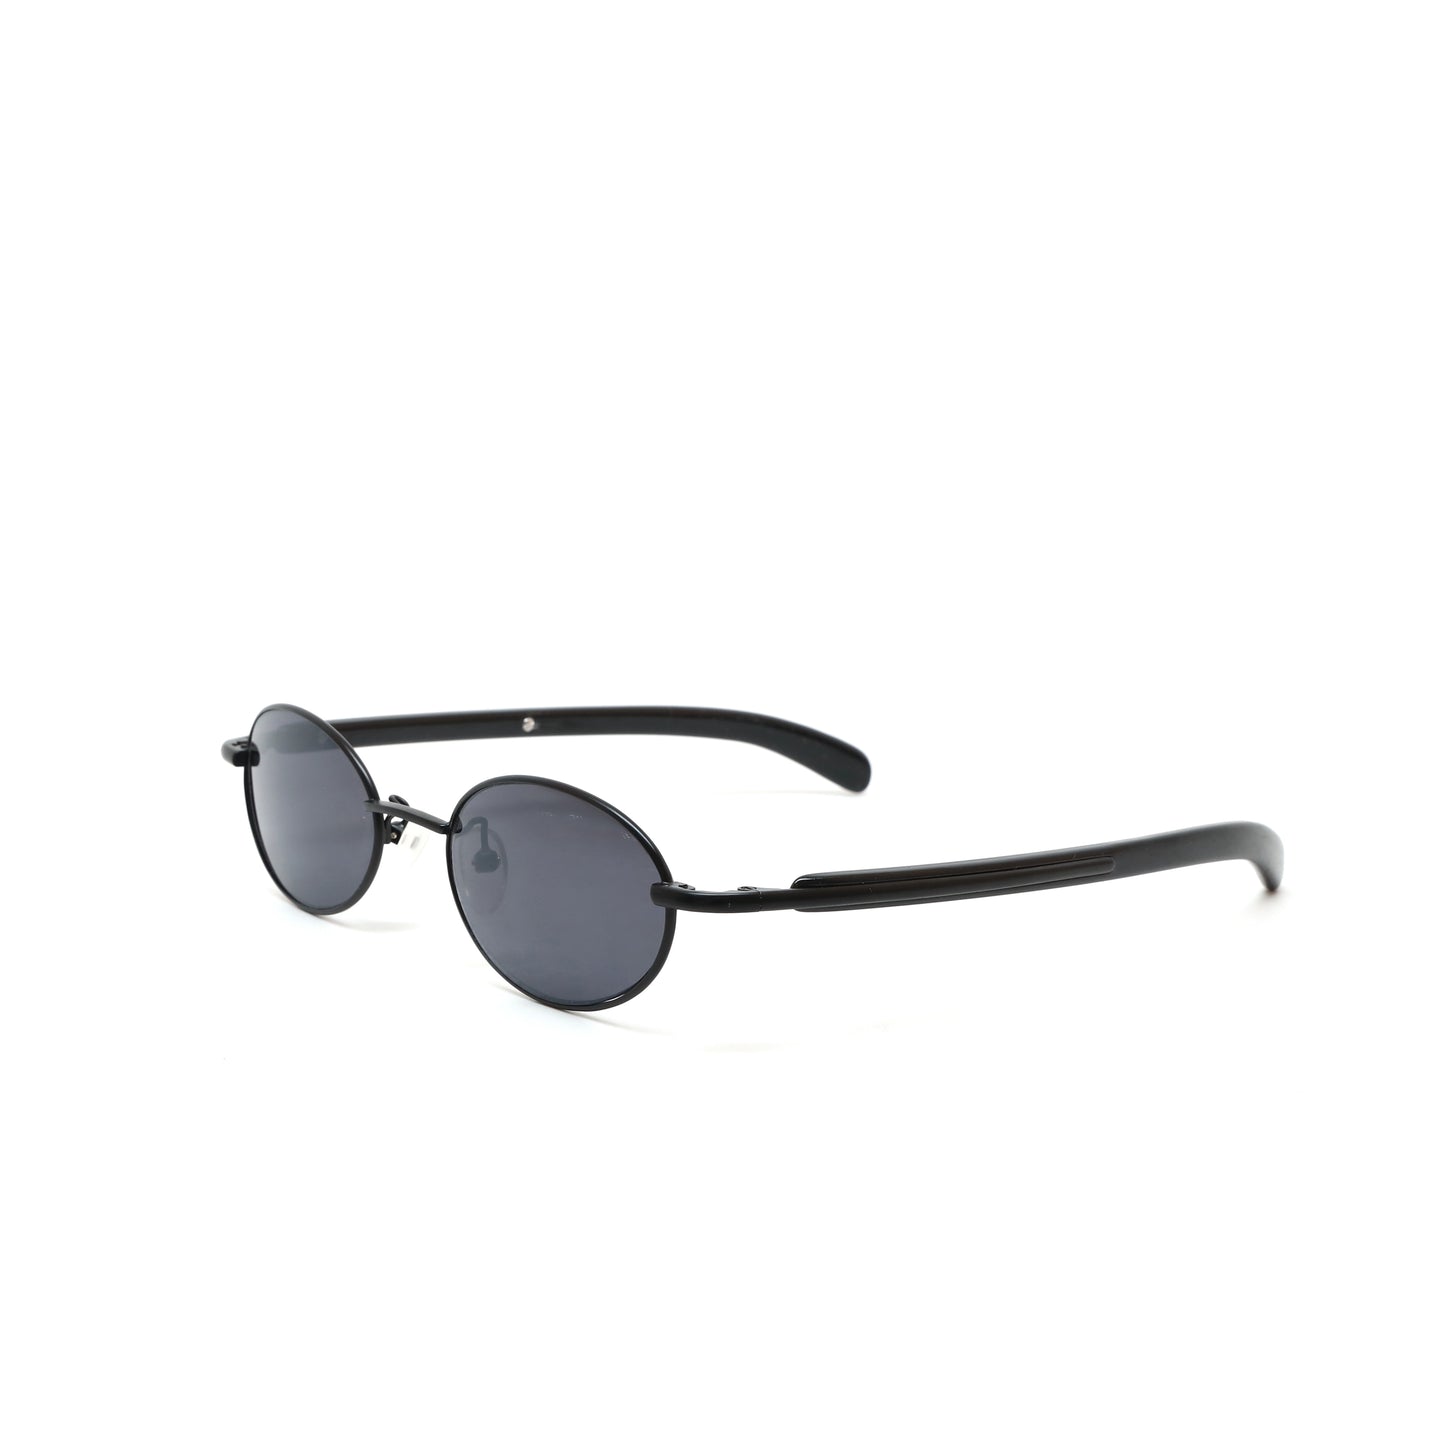 Vintage 90s Small Size Narrow Frame Wraparound  Sunglasses - Grey